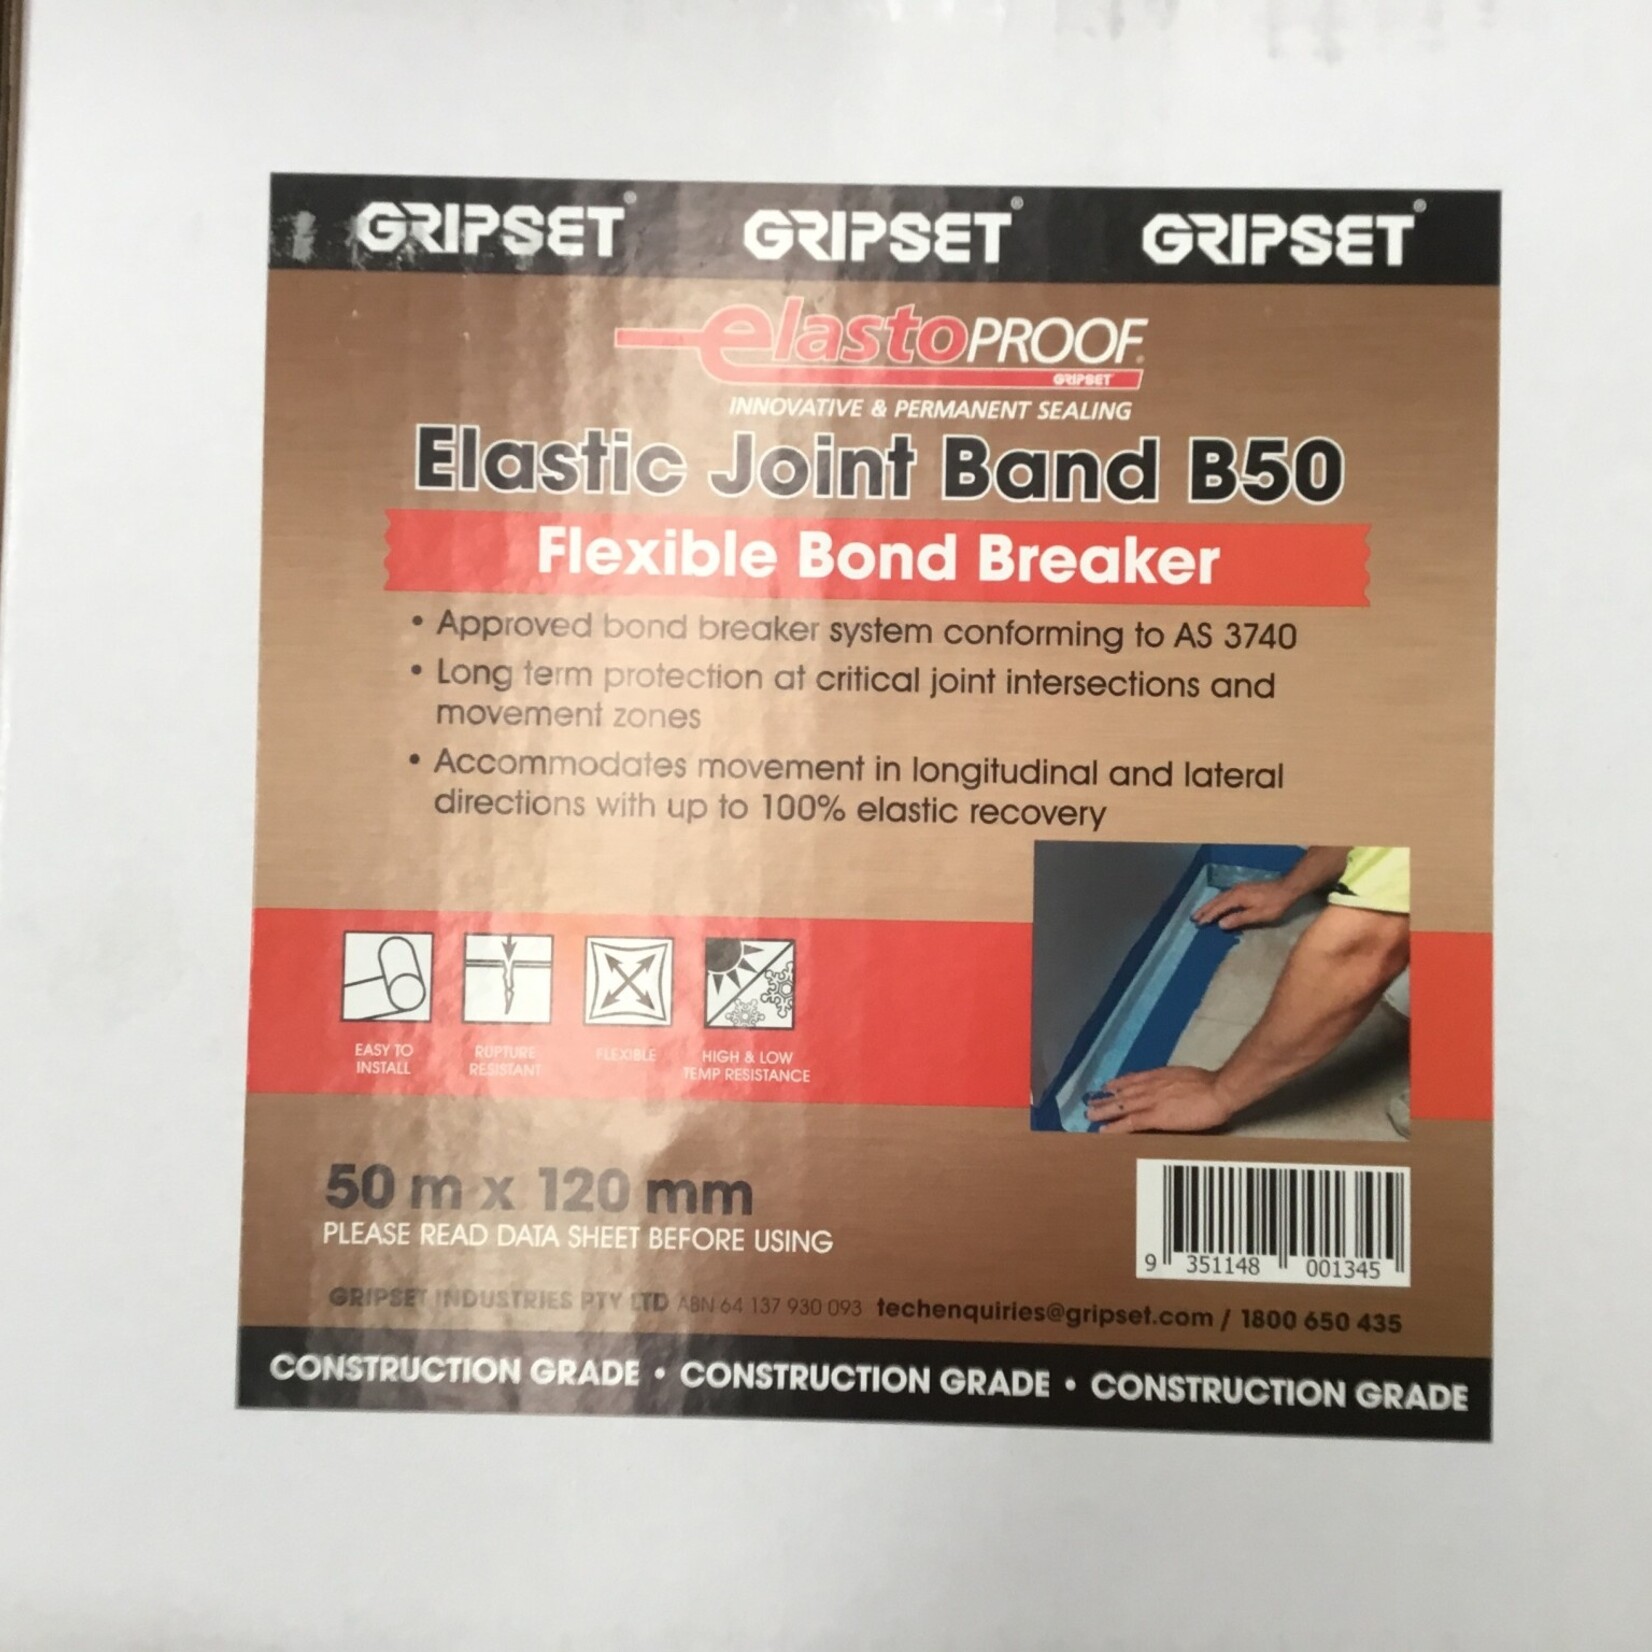 Gripset Elastoproof Joint Band B